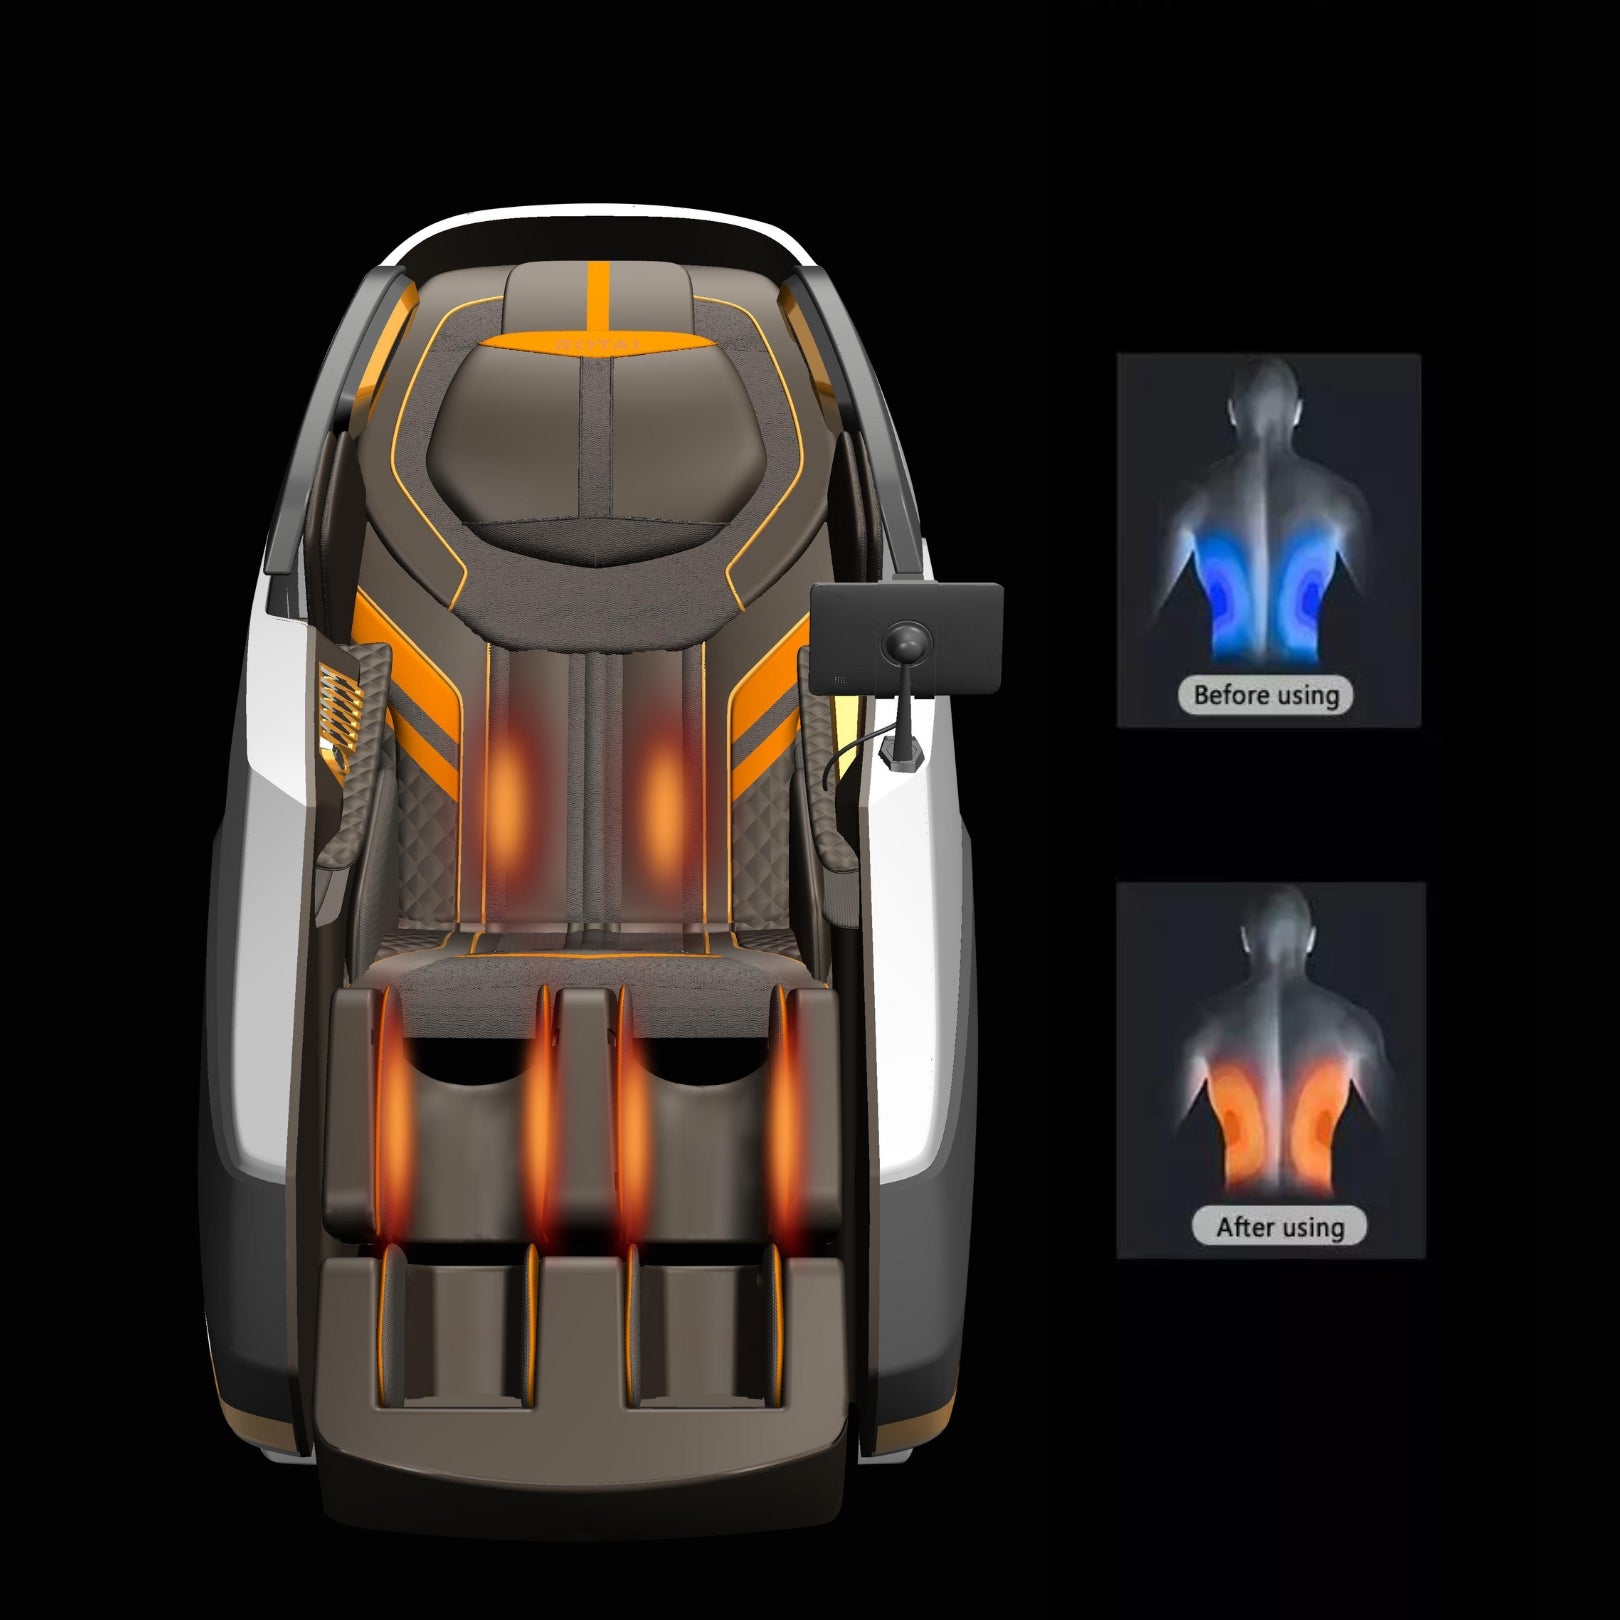 Heating massage chairs